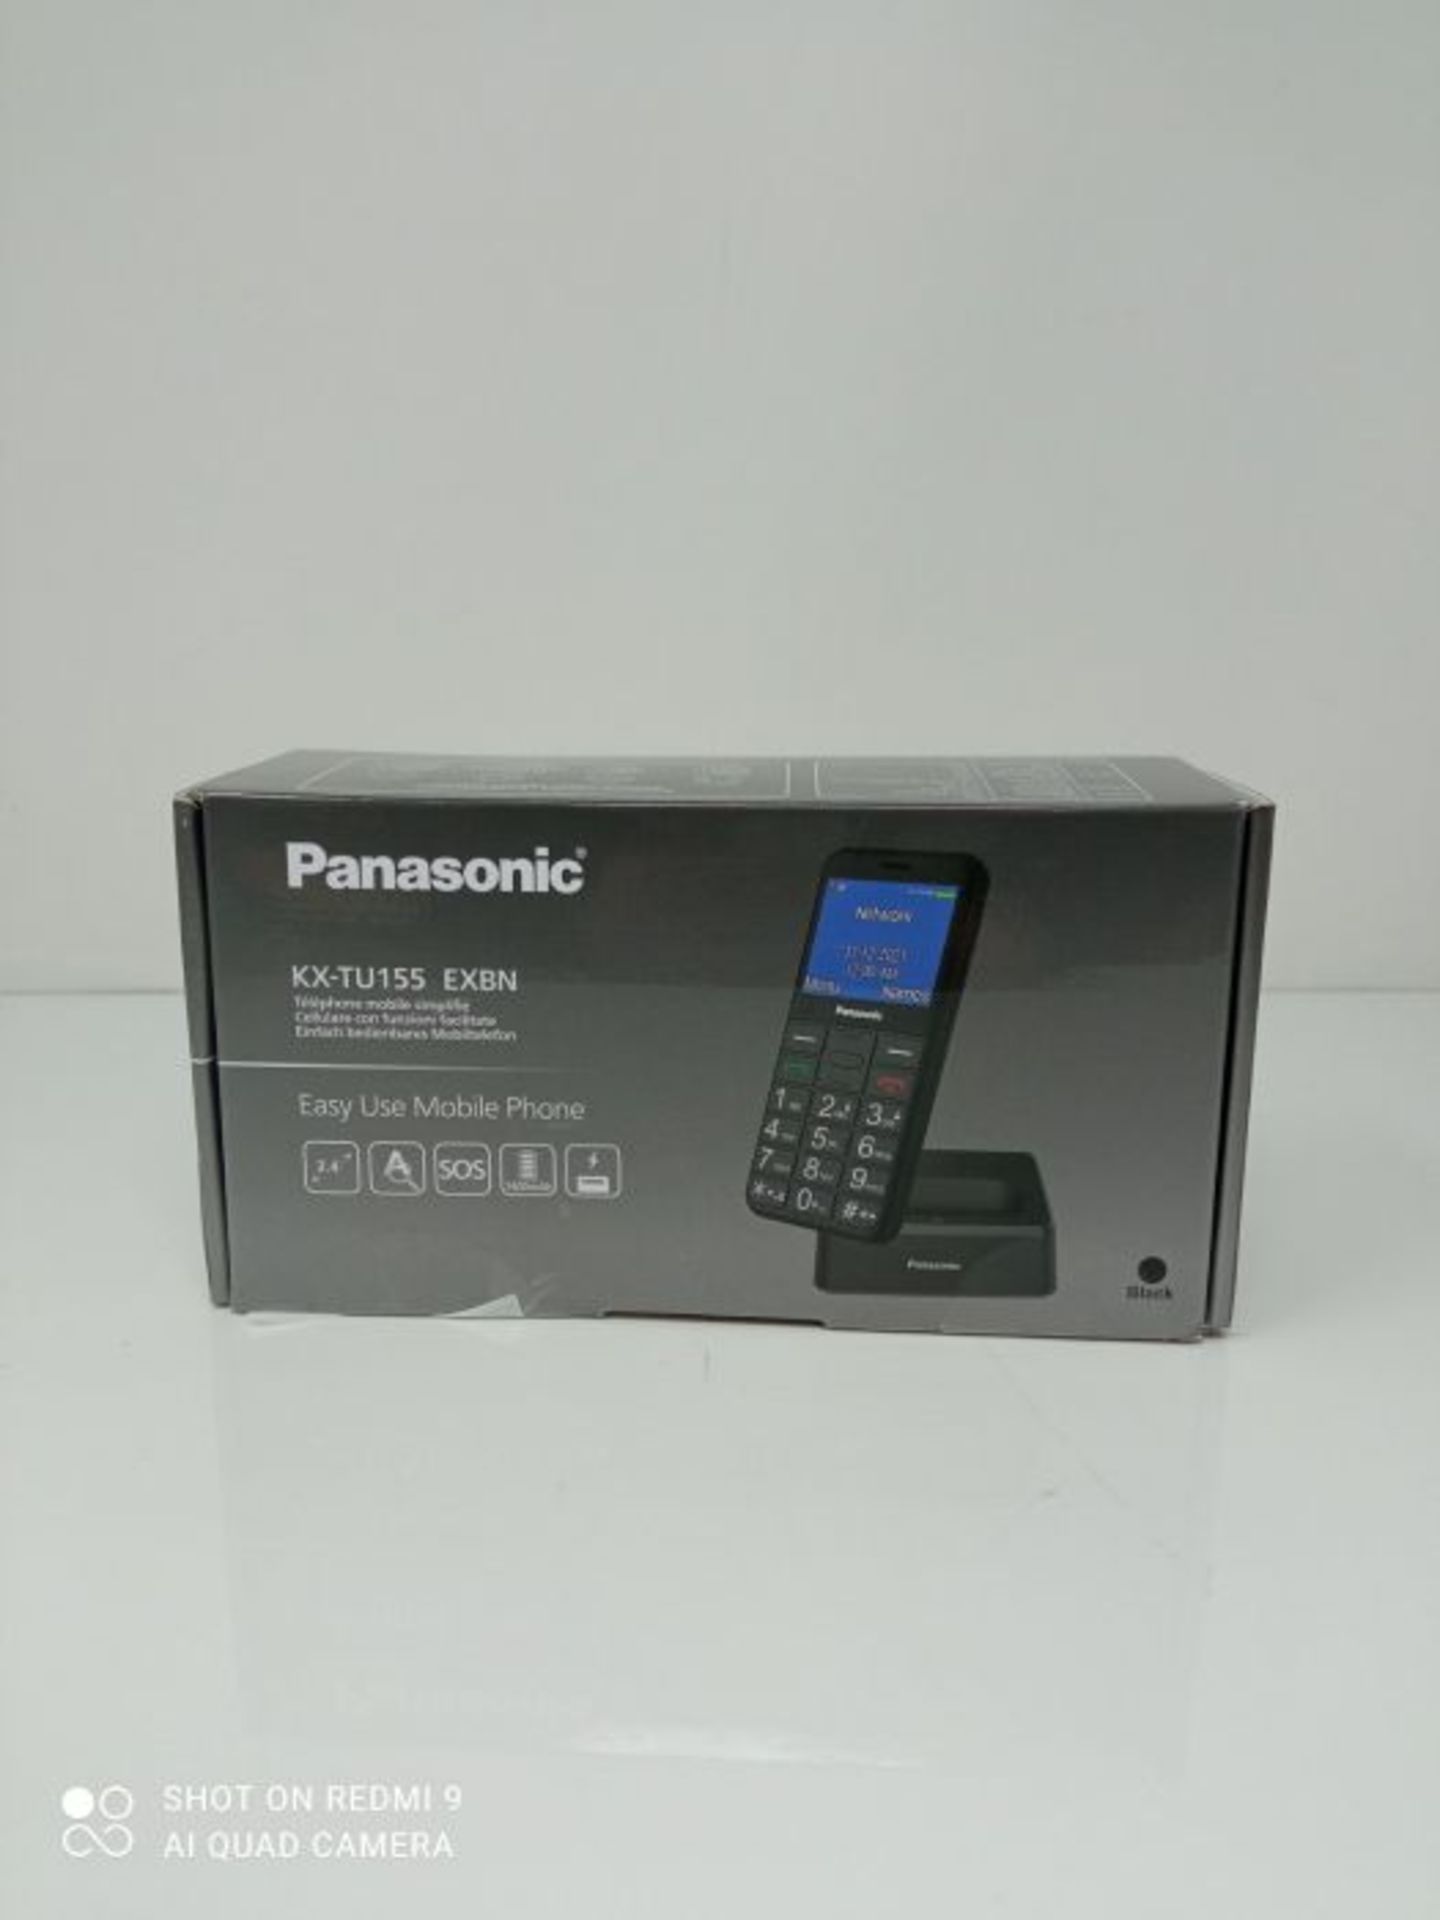 Panasonic KX-TU155EXBN Seniorenhandy (SOS-Notfalltaste, Hörgerätekompatibel, Taschen